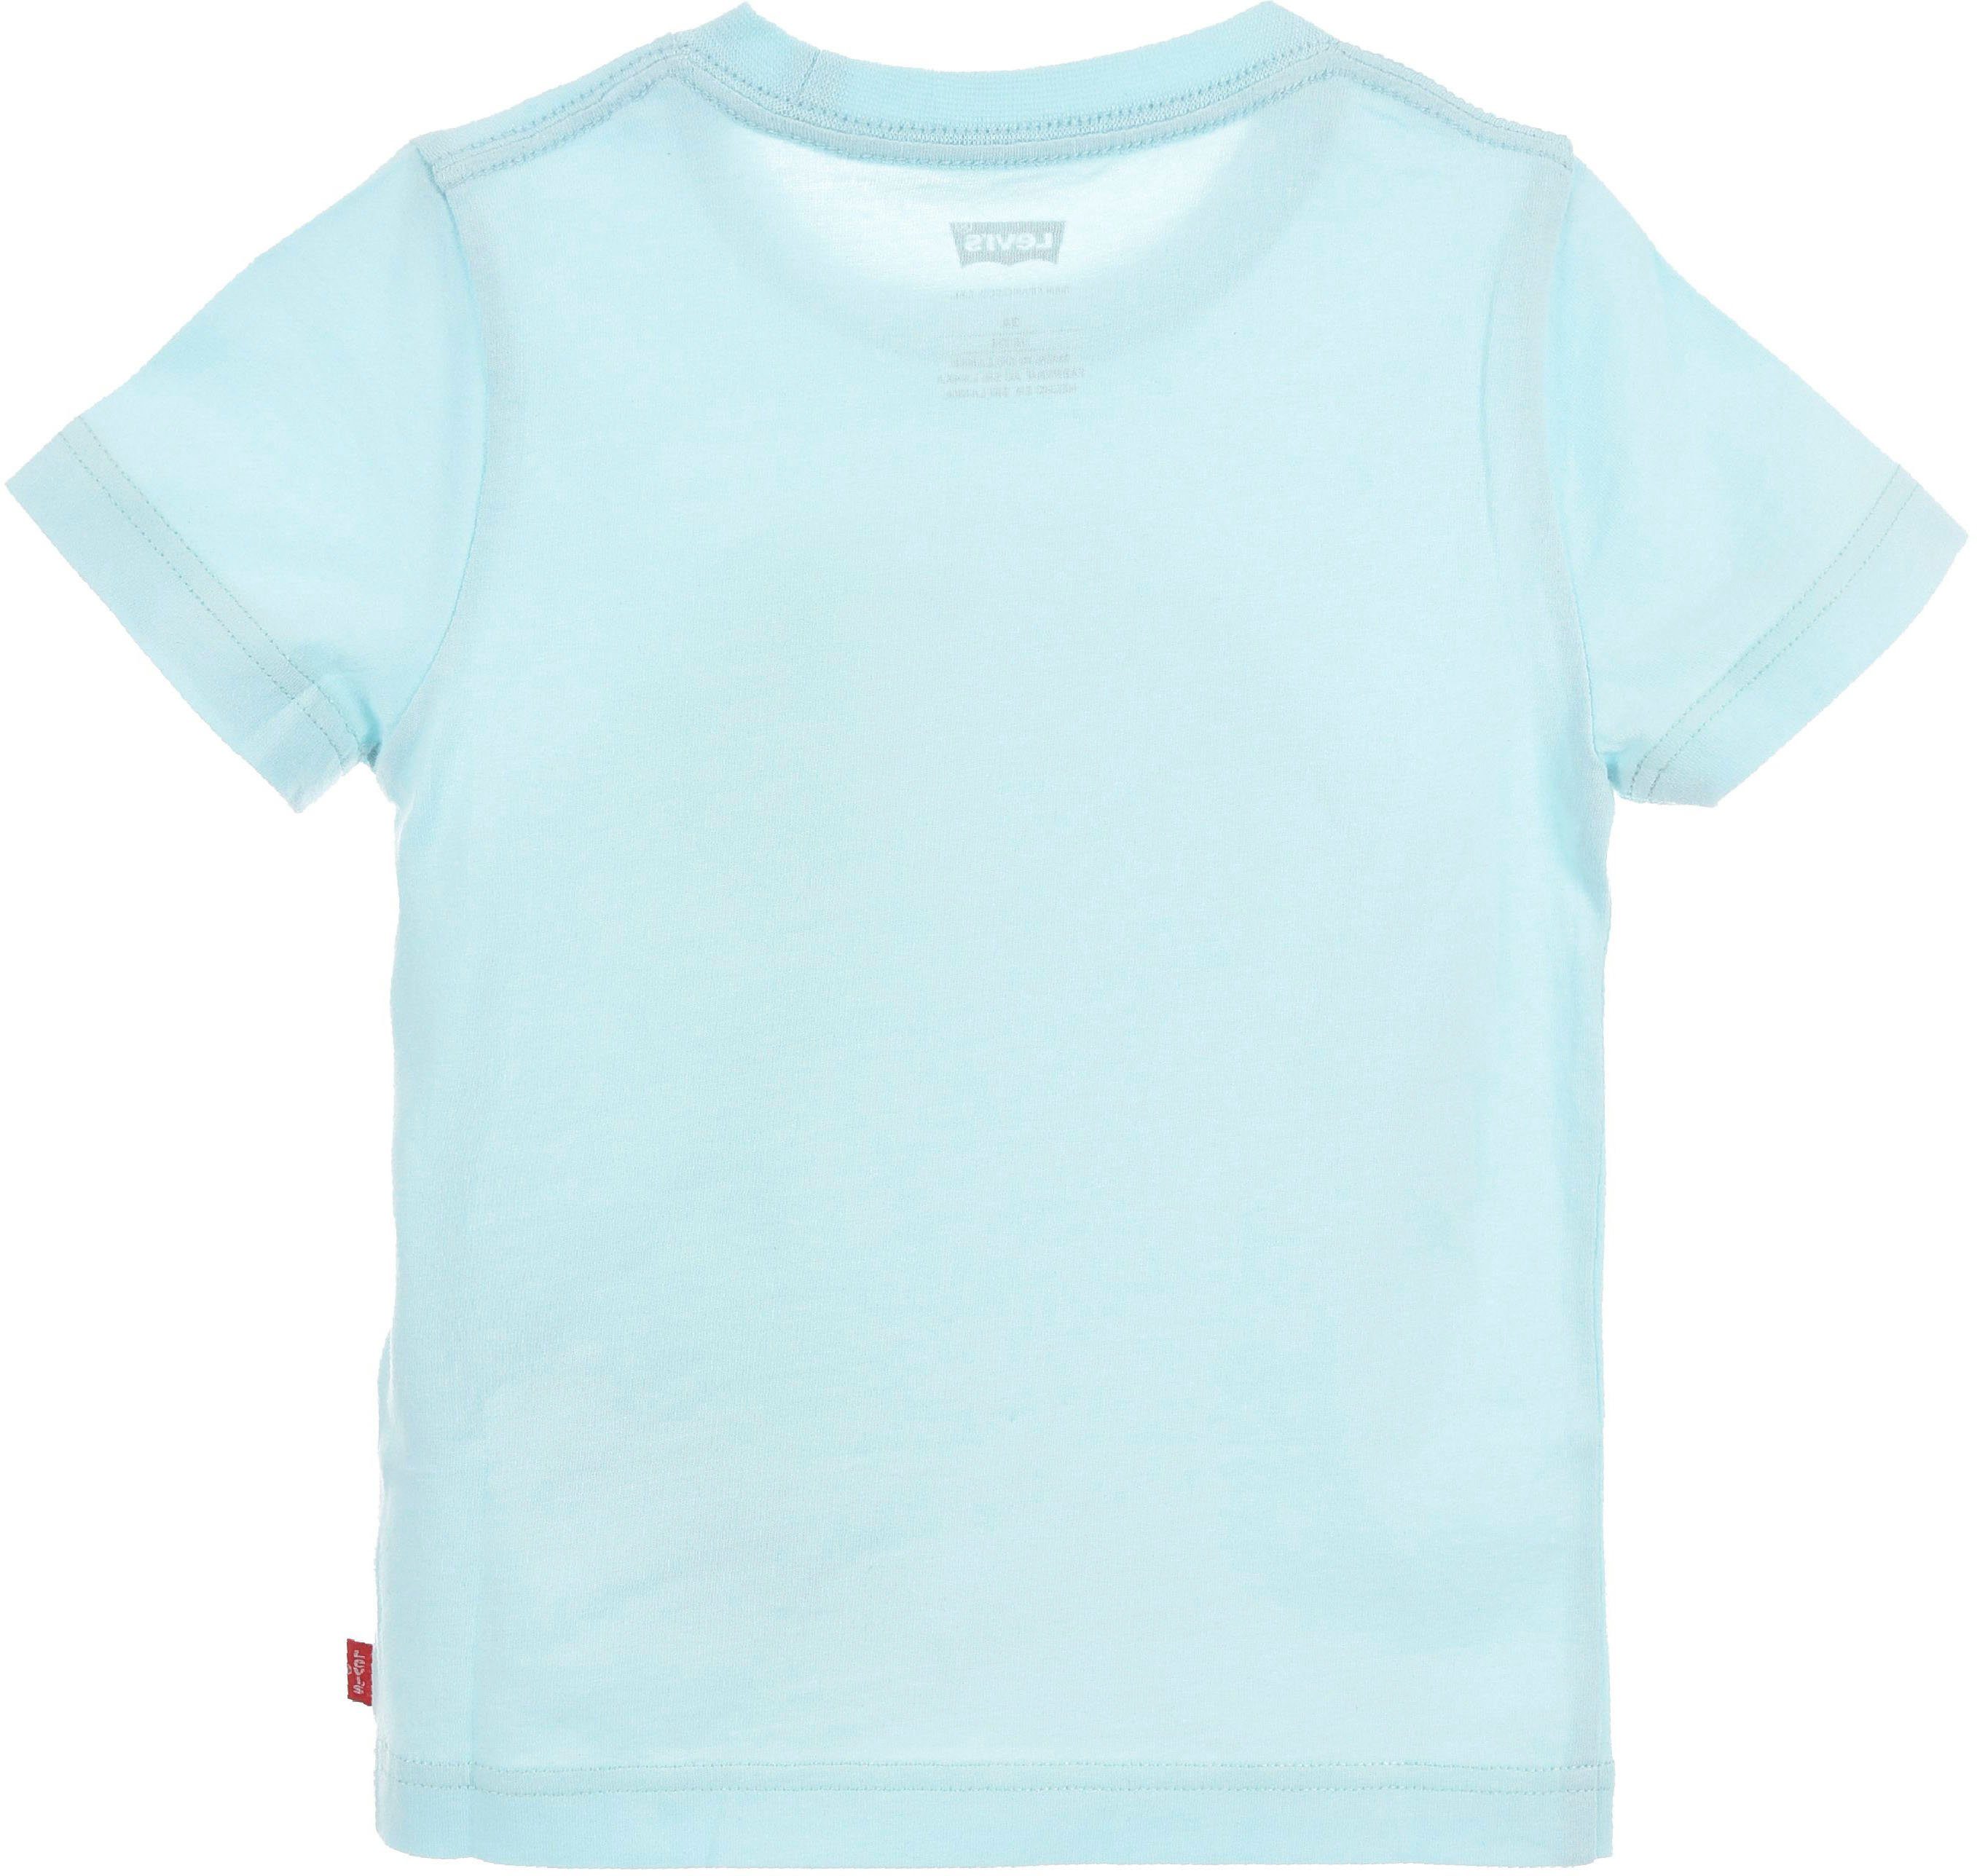 TEE T-Shirt LOGO Levi's® for MARBLE Kids SHIRT BOYS